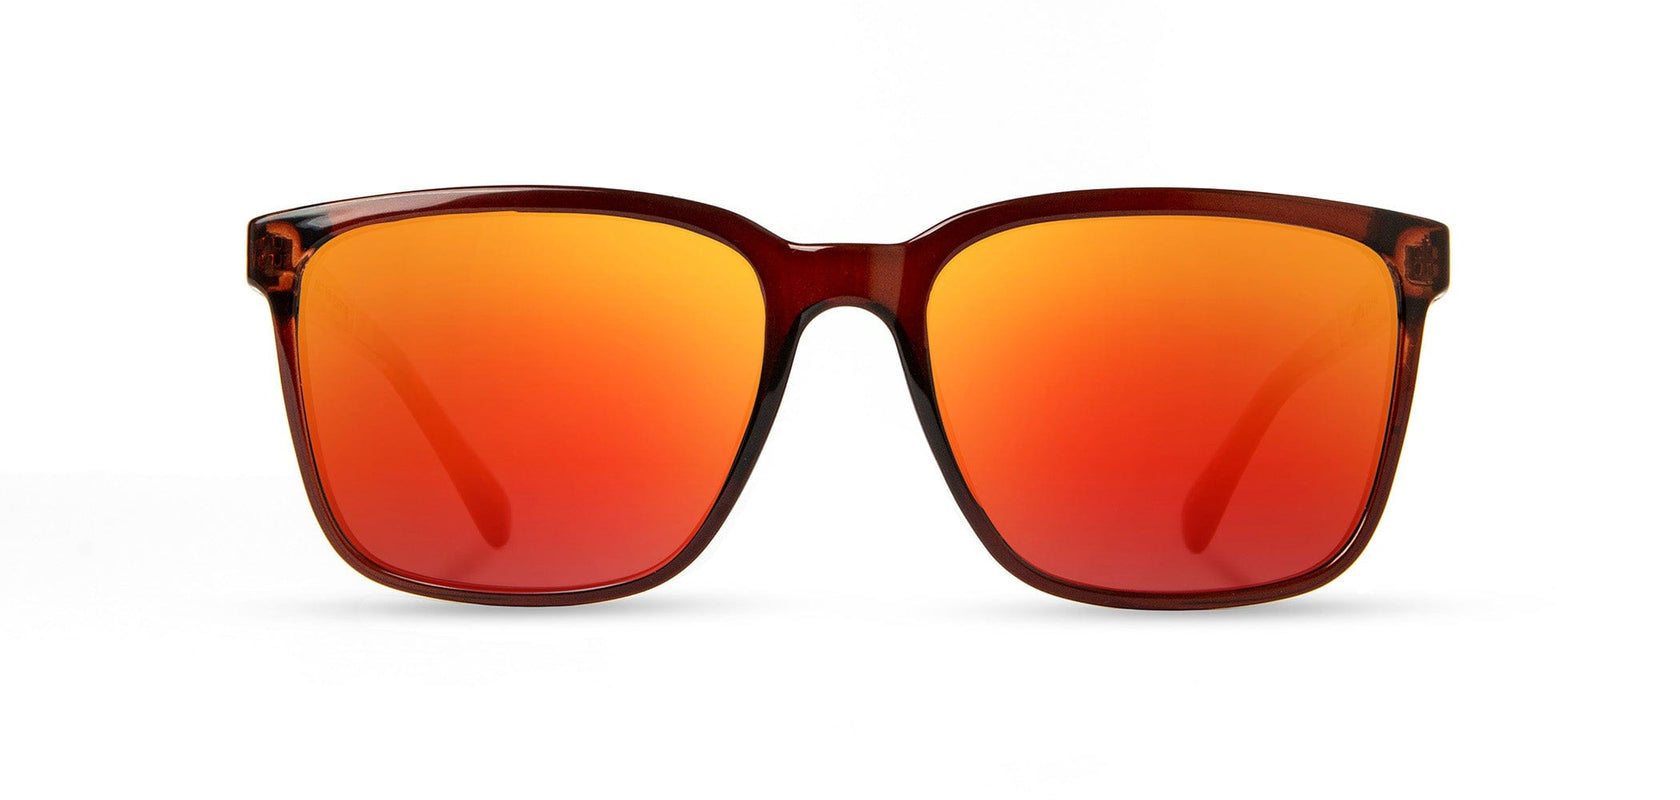 Ash Women's Square Sunglasses - Black Orange